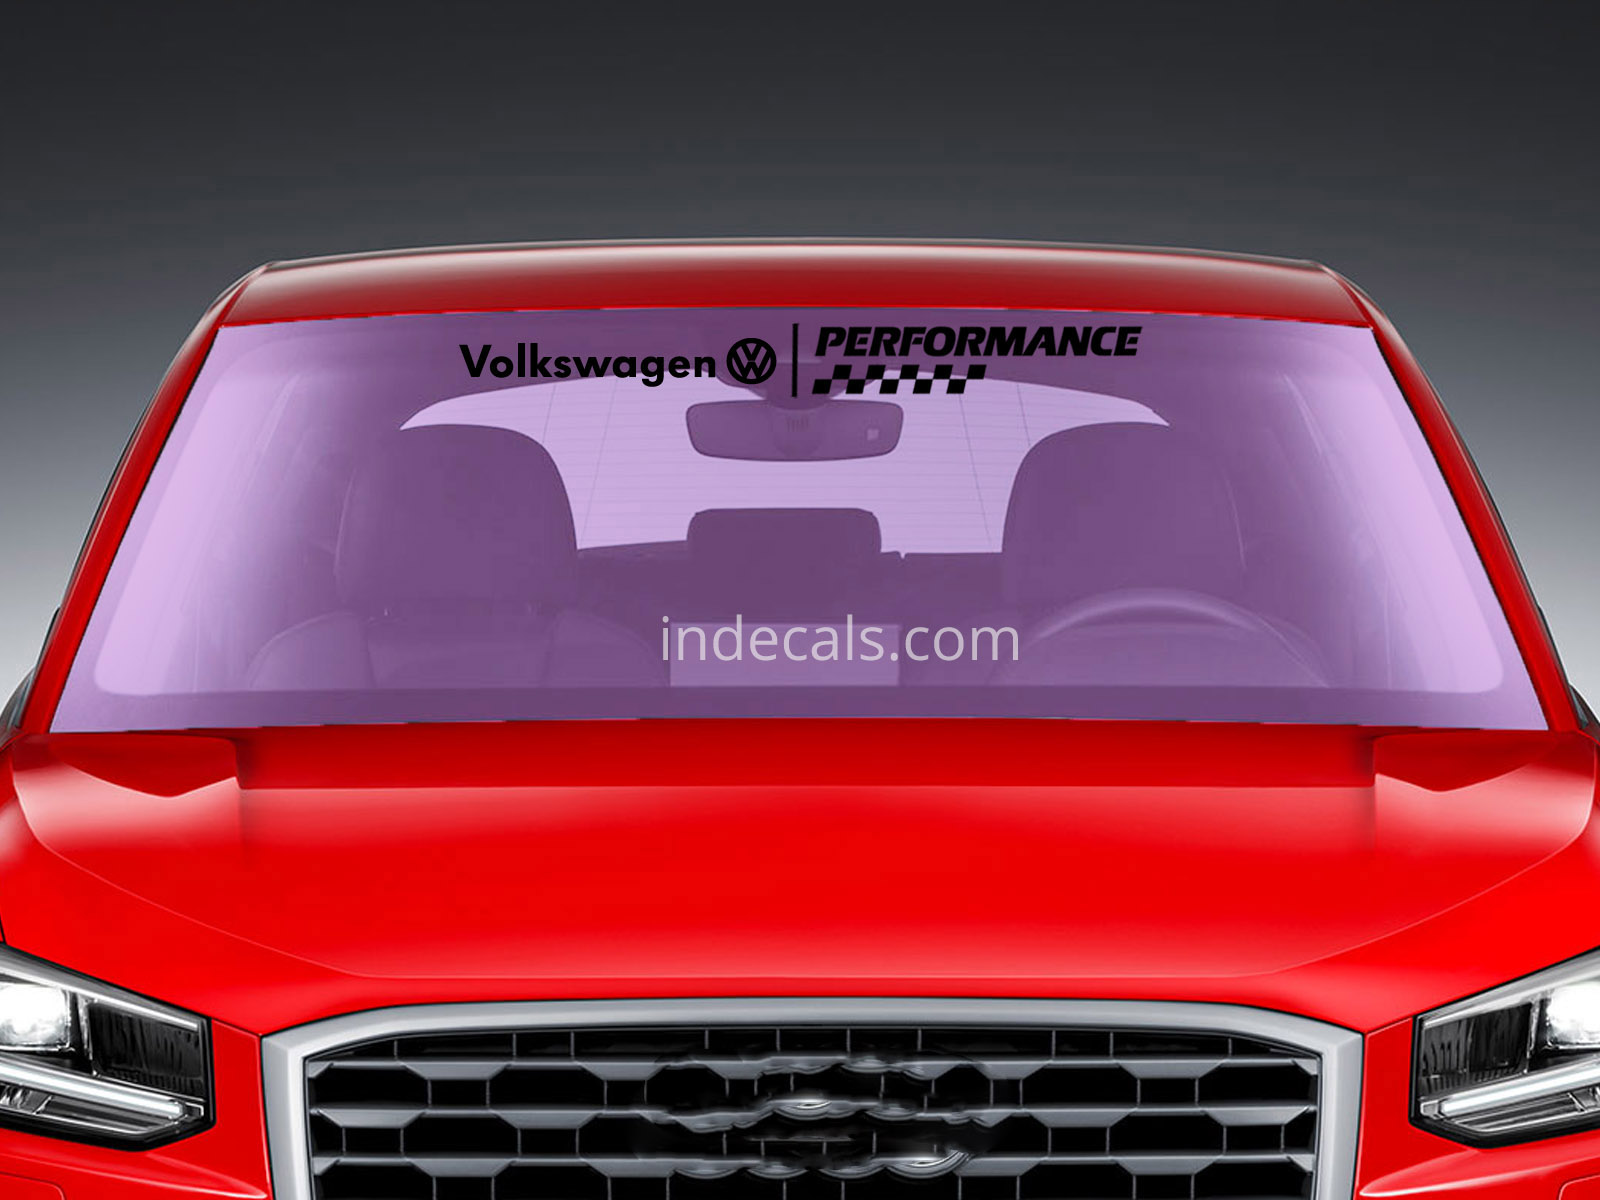 1 x Volkswagen Performance Sticker for Windshield or Back Window - Black